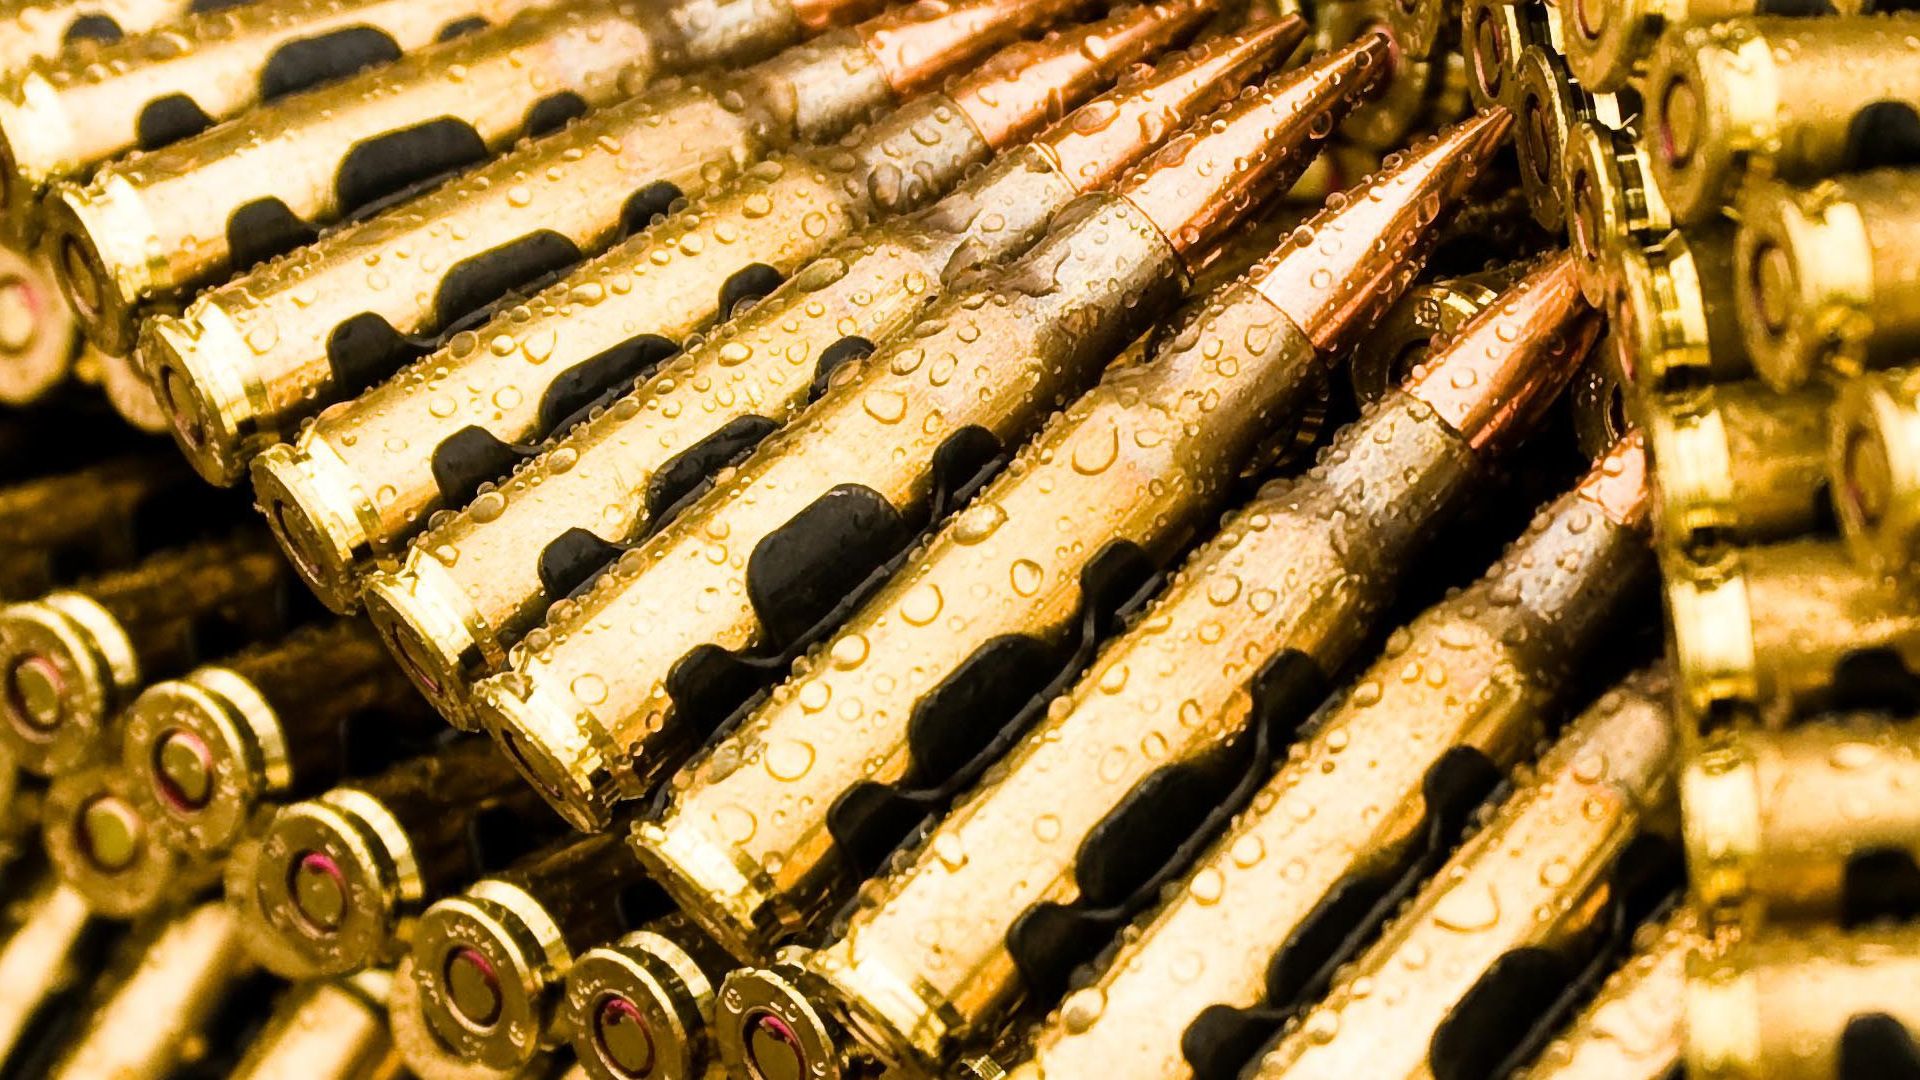 14 HD Ammunition Bullet Wallpapers.